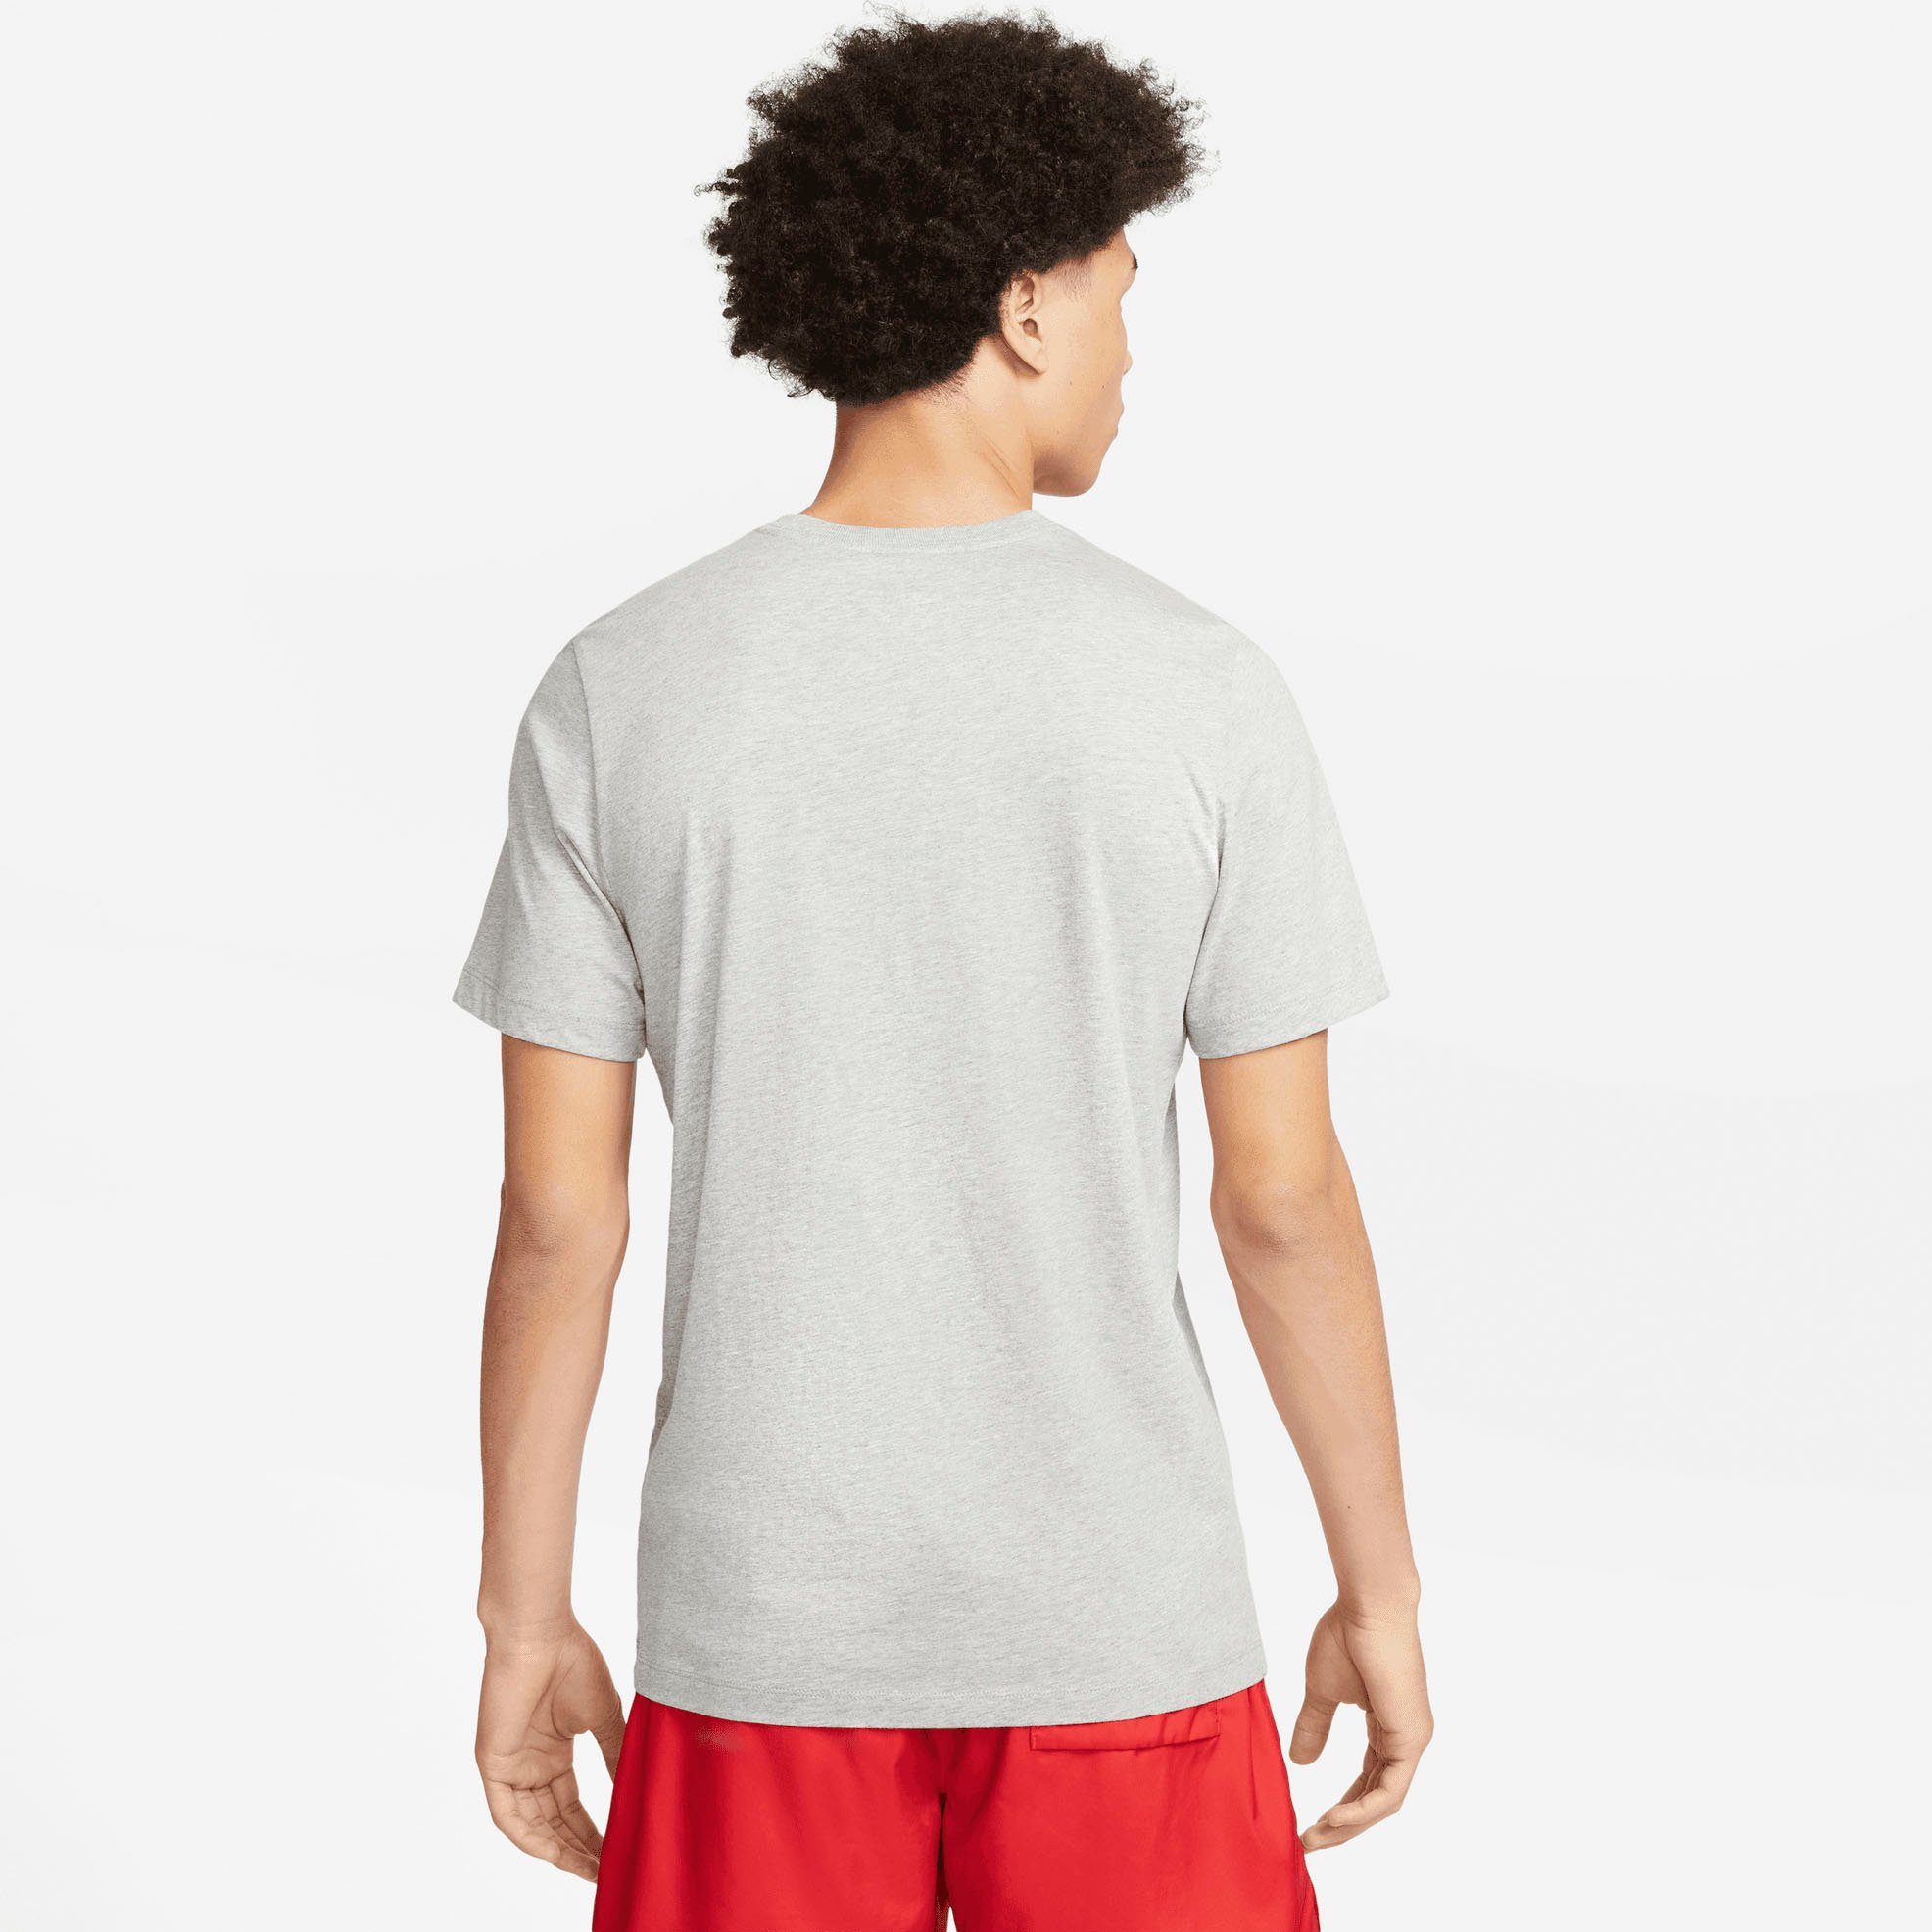 Sportswear T-Shirt HEATHER DK T-Shirt Men's GREY Nike